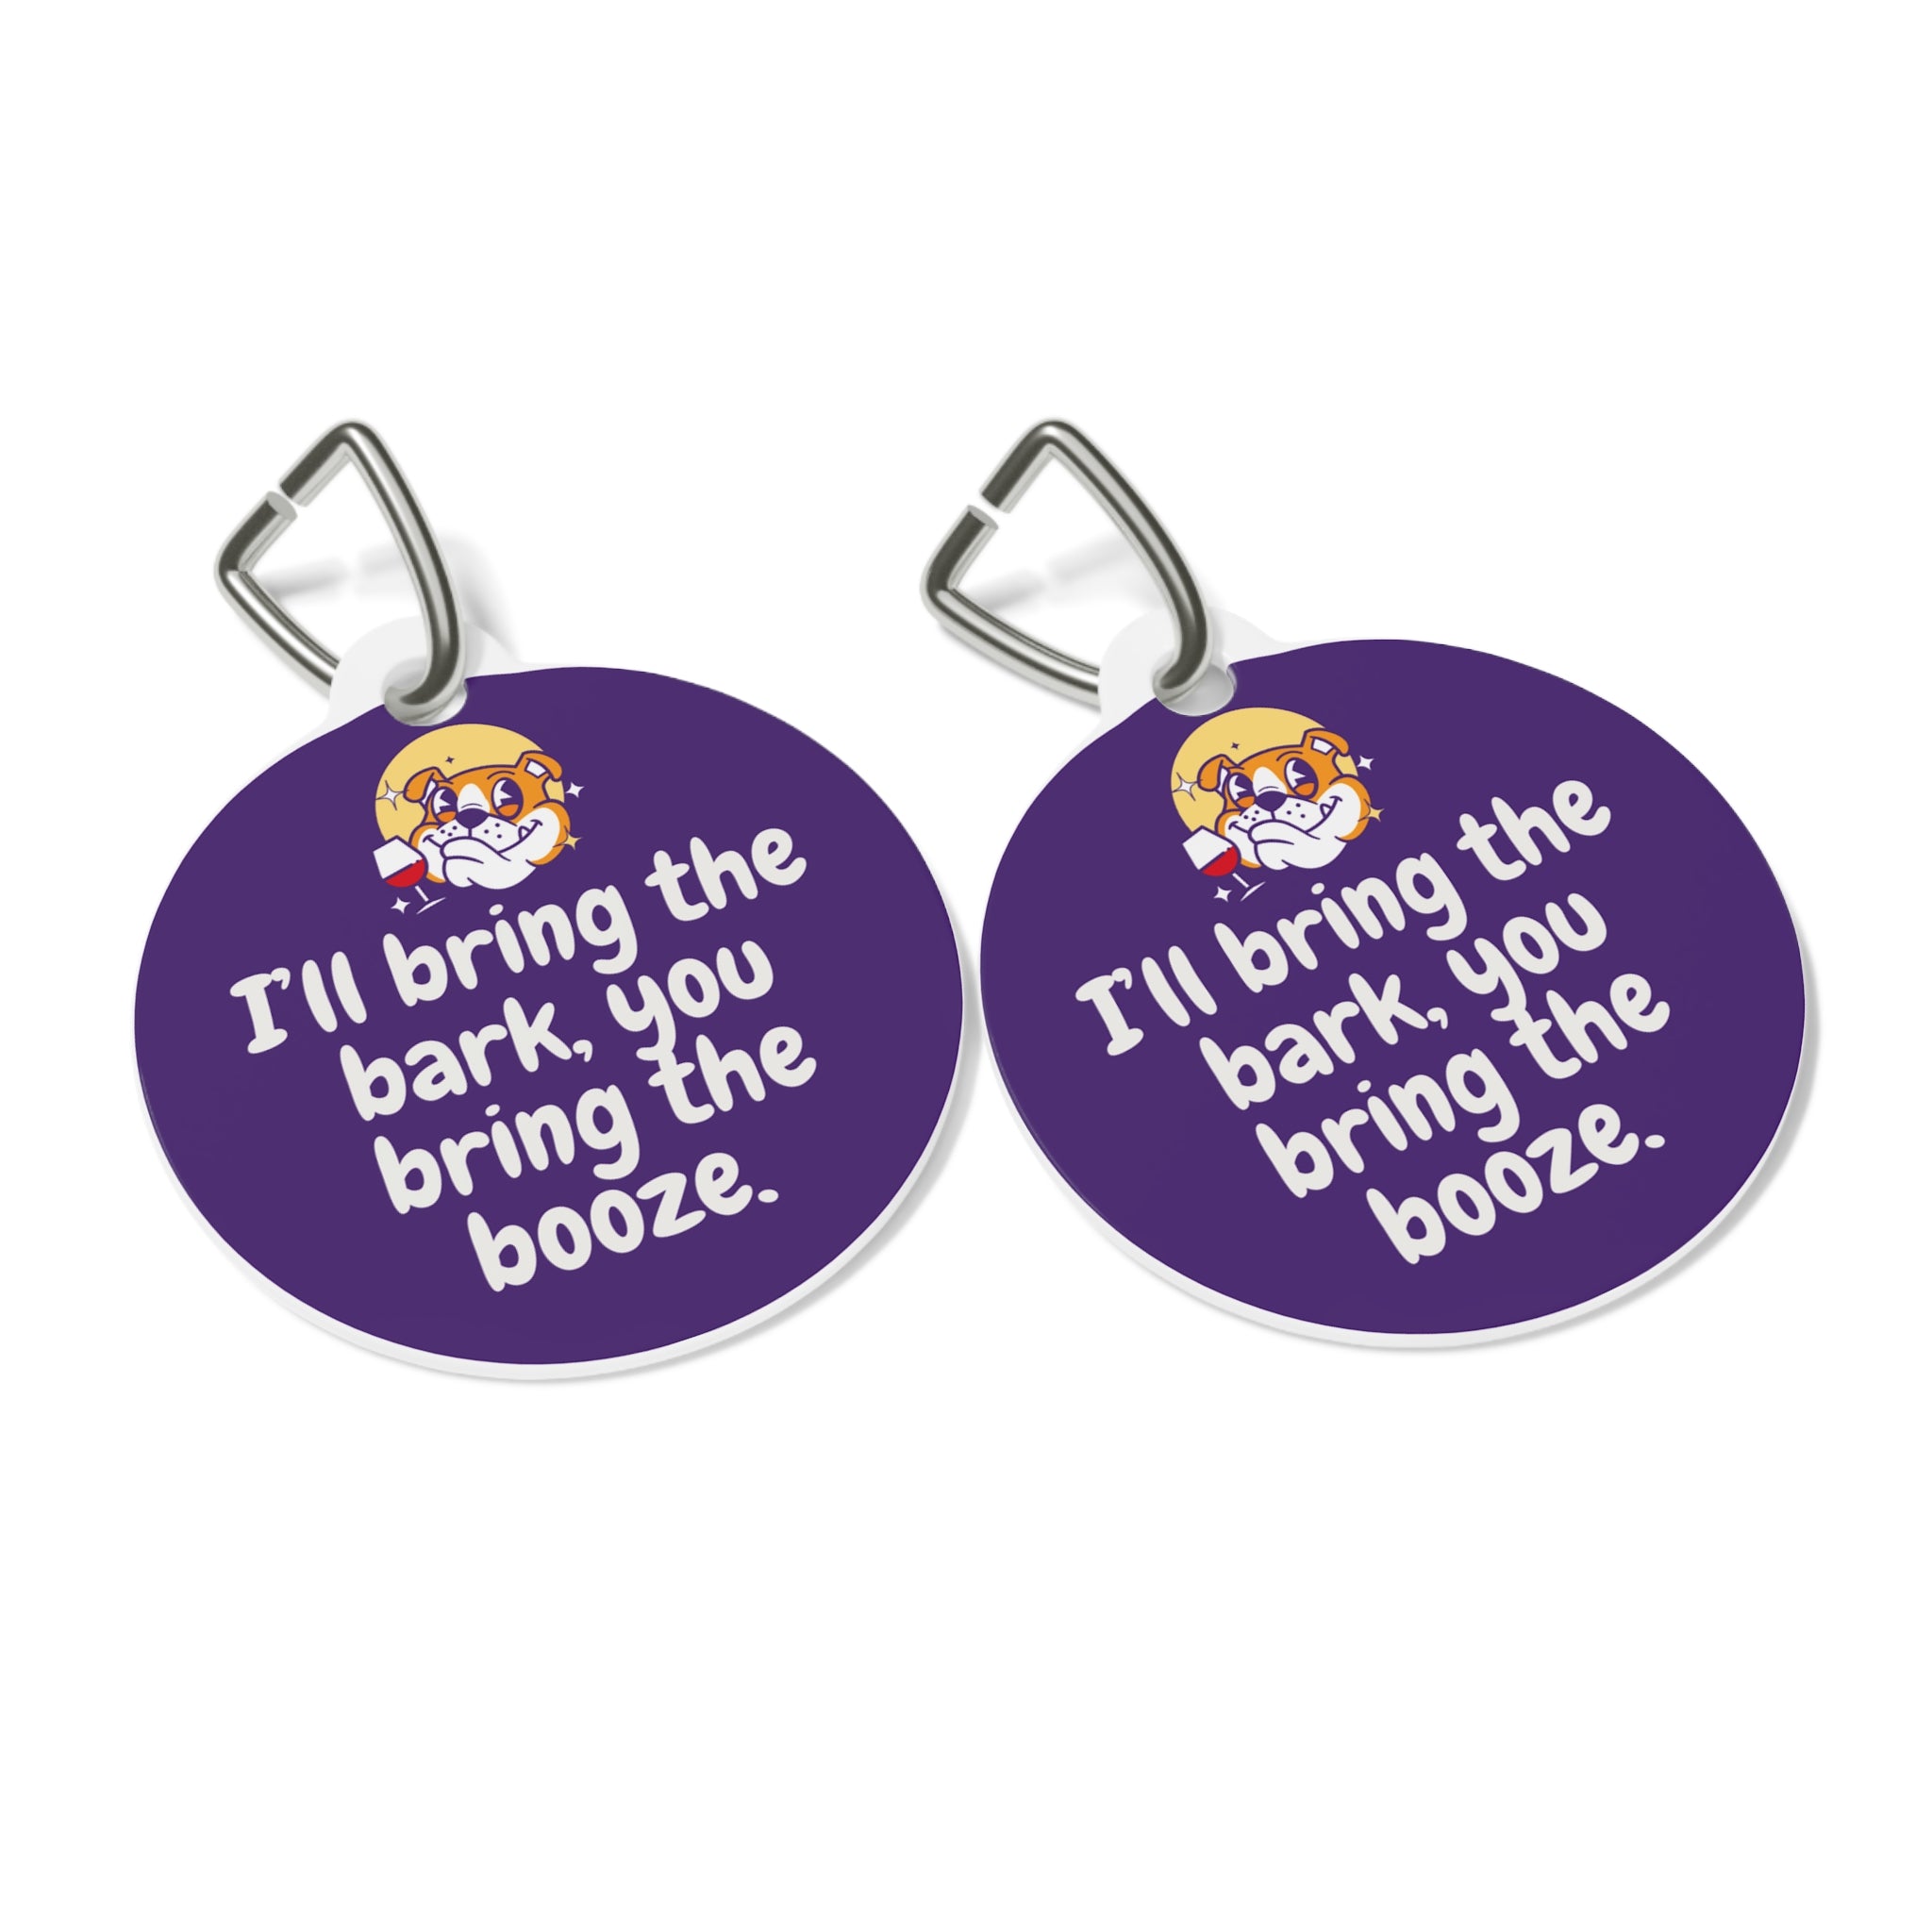 Tipsy Bully Dog Tags: "I'll Bring the Bark, You Bring the Booze" Edition - Purple